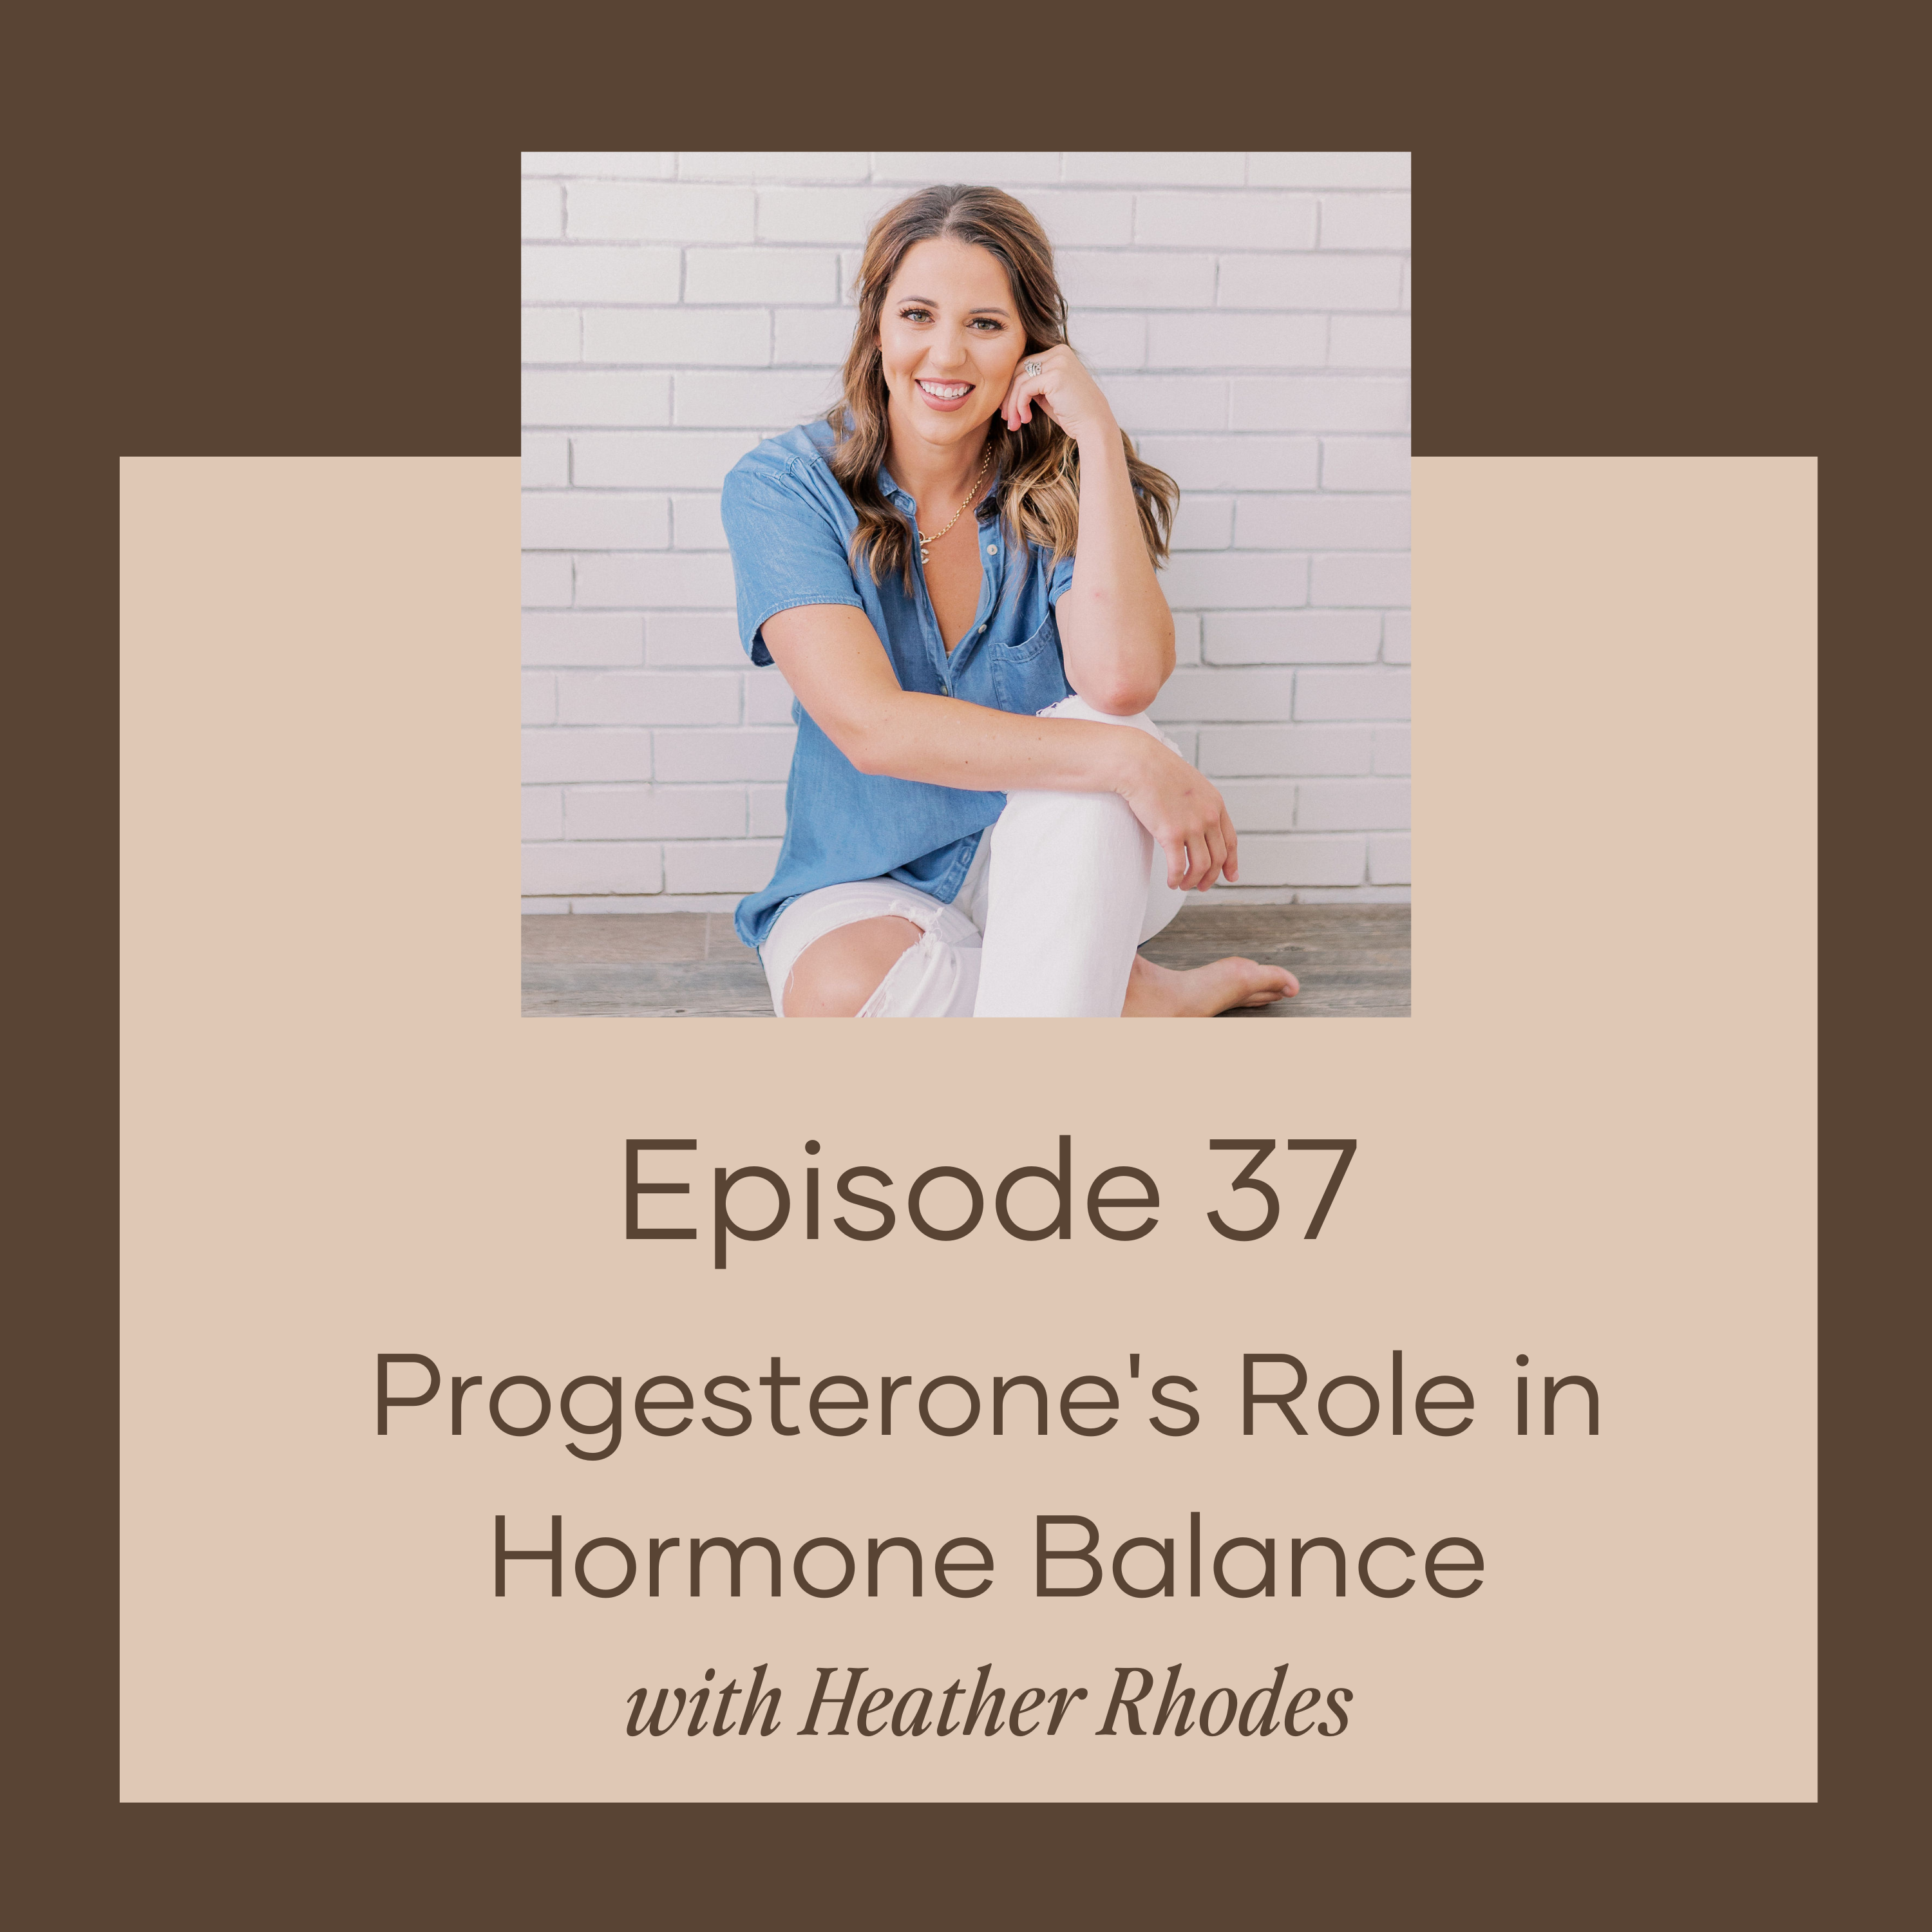 Progesterone's Role in Hormone Balance